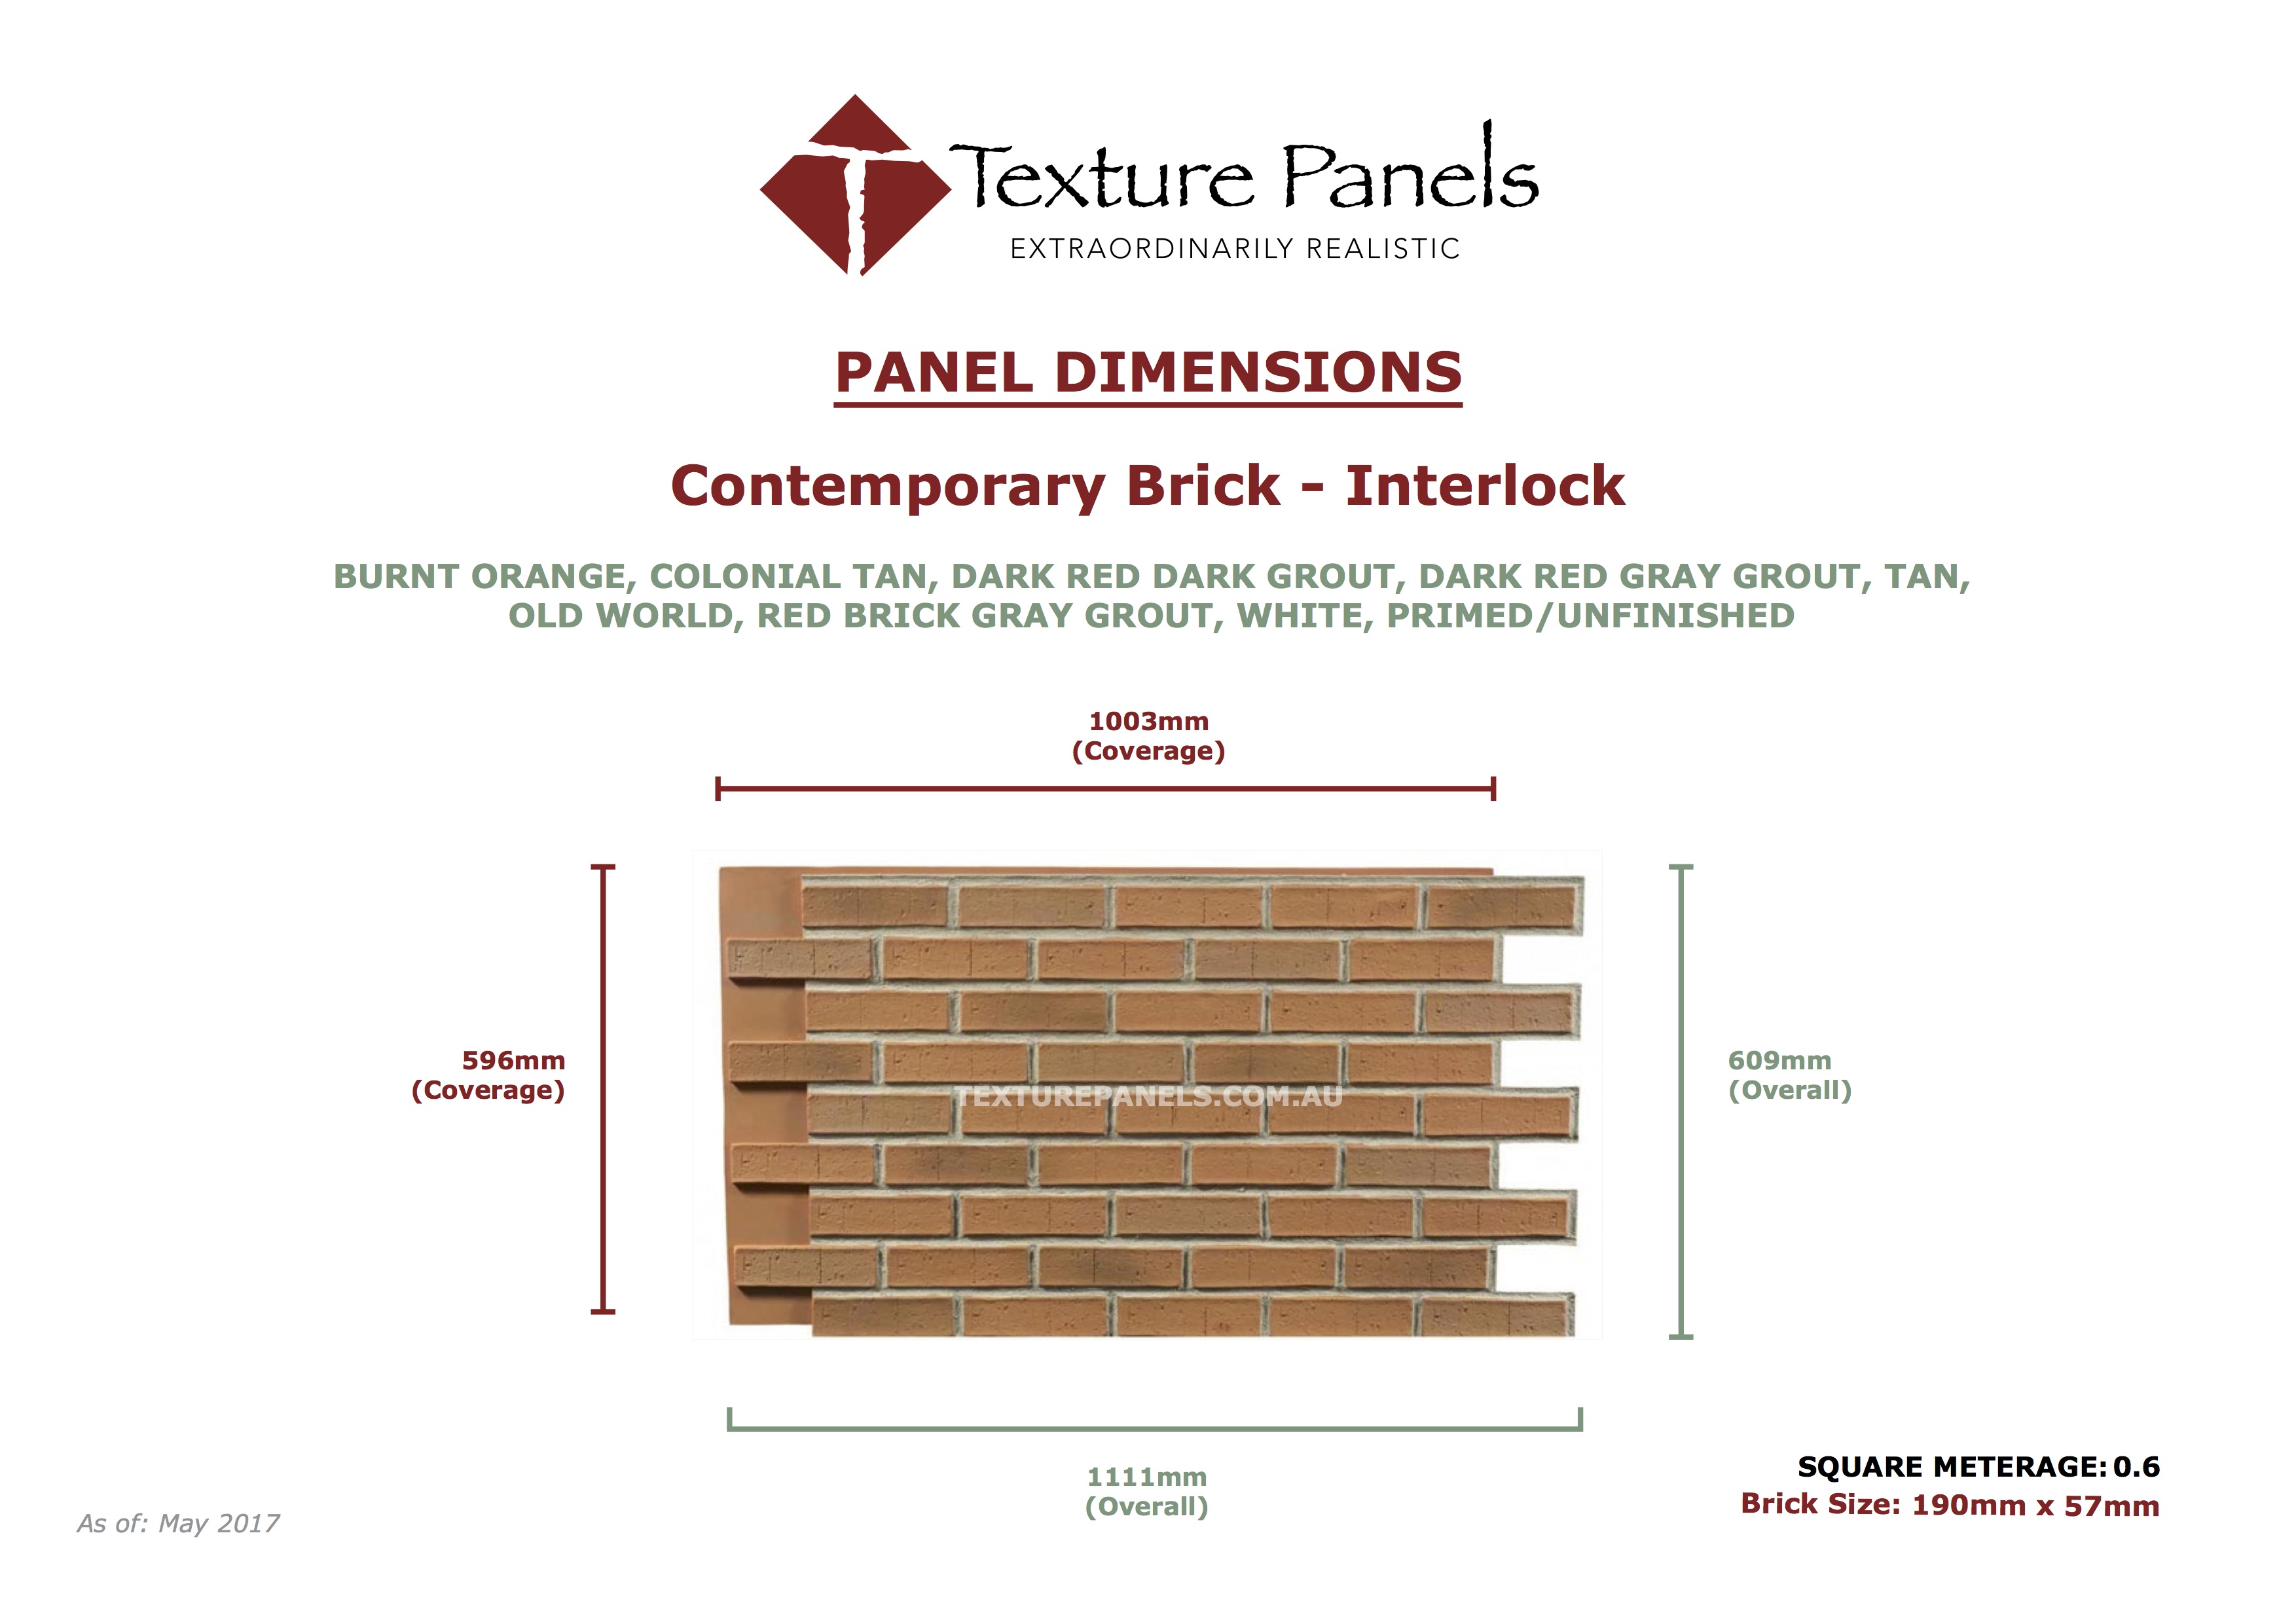 Contemporary Brick Interlock - Dark Red Dark Grout Dimensions 